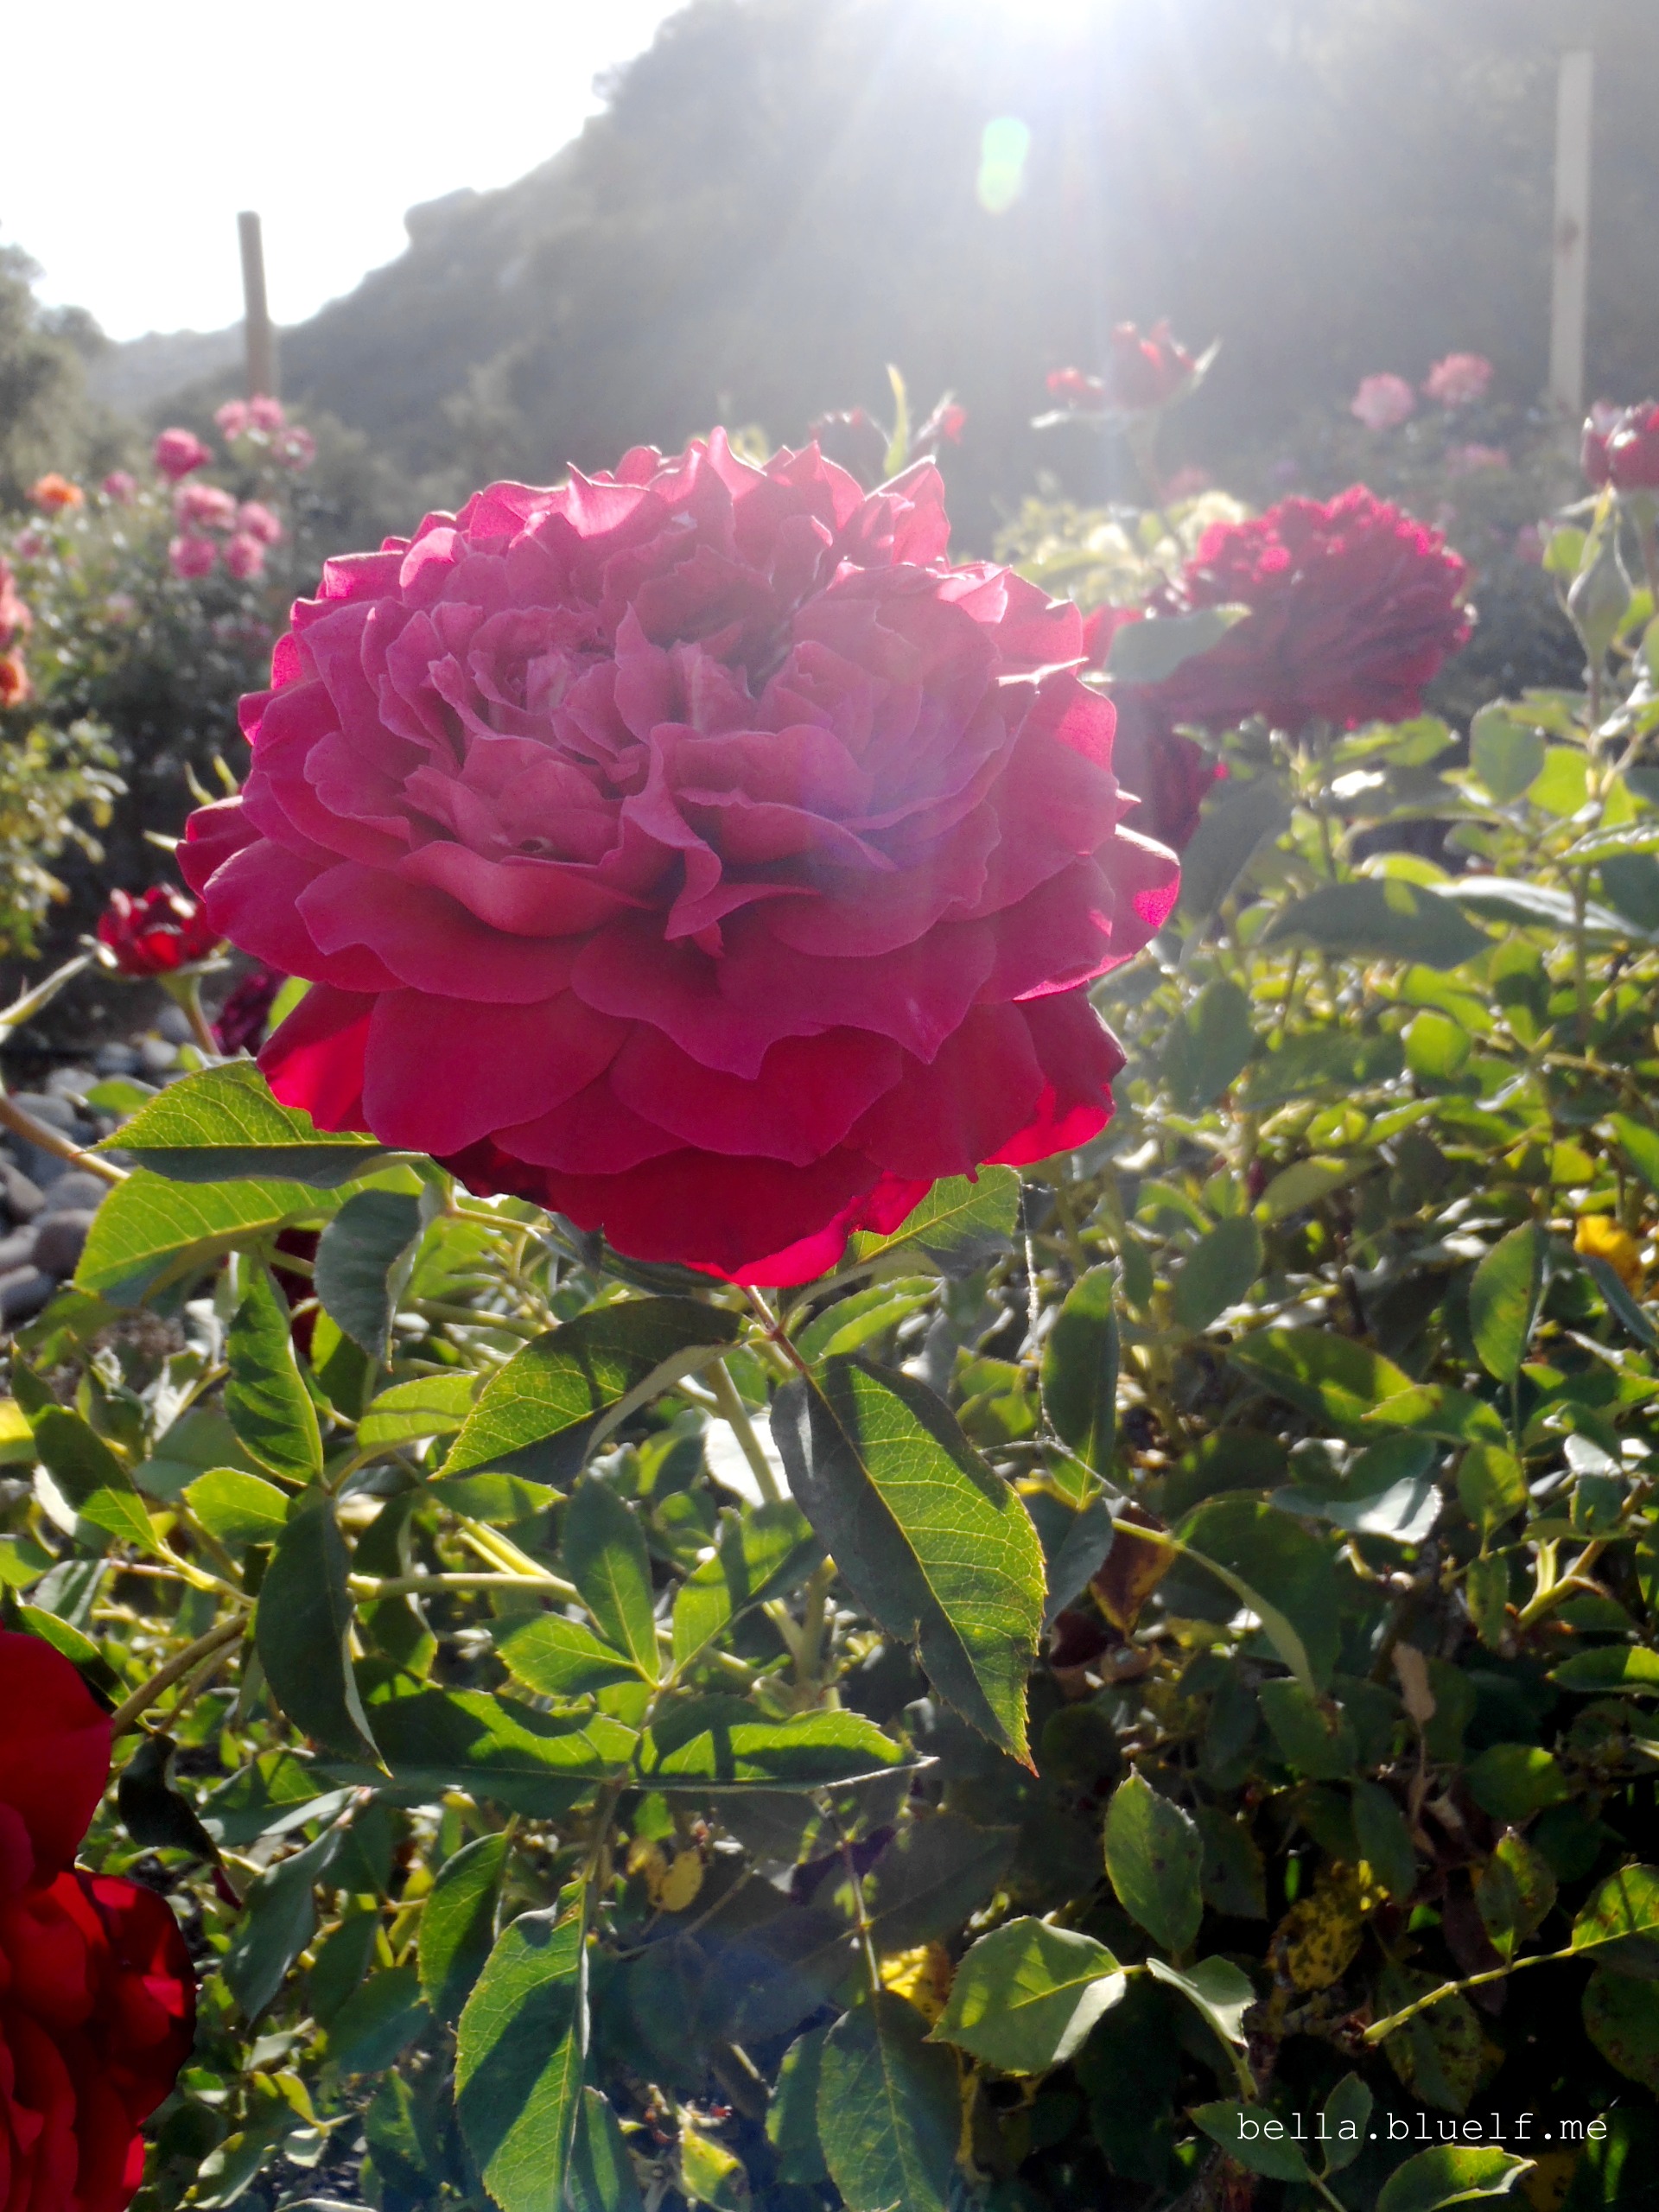 Sun Kissing Red Rose 2 - 2015 photo by Rhônya Holman for bella.bluelf.me